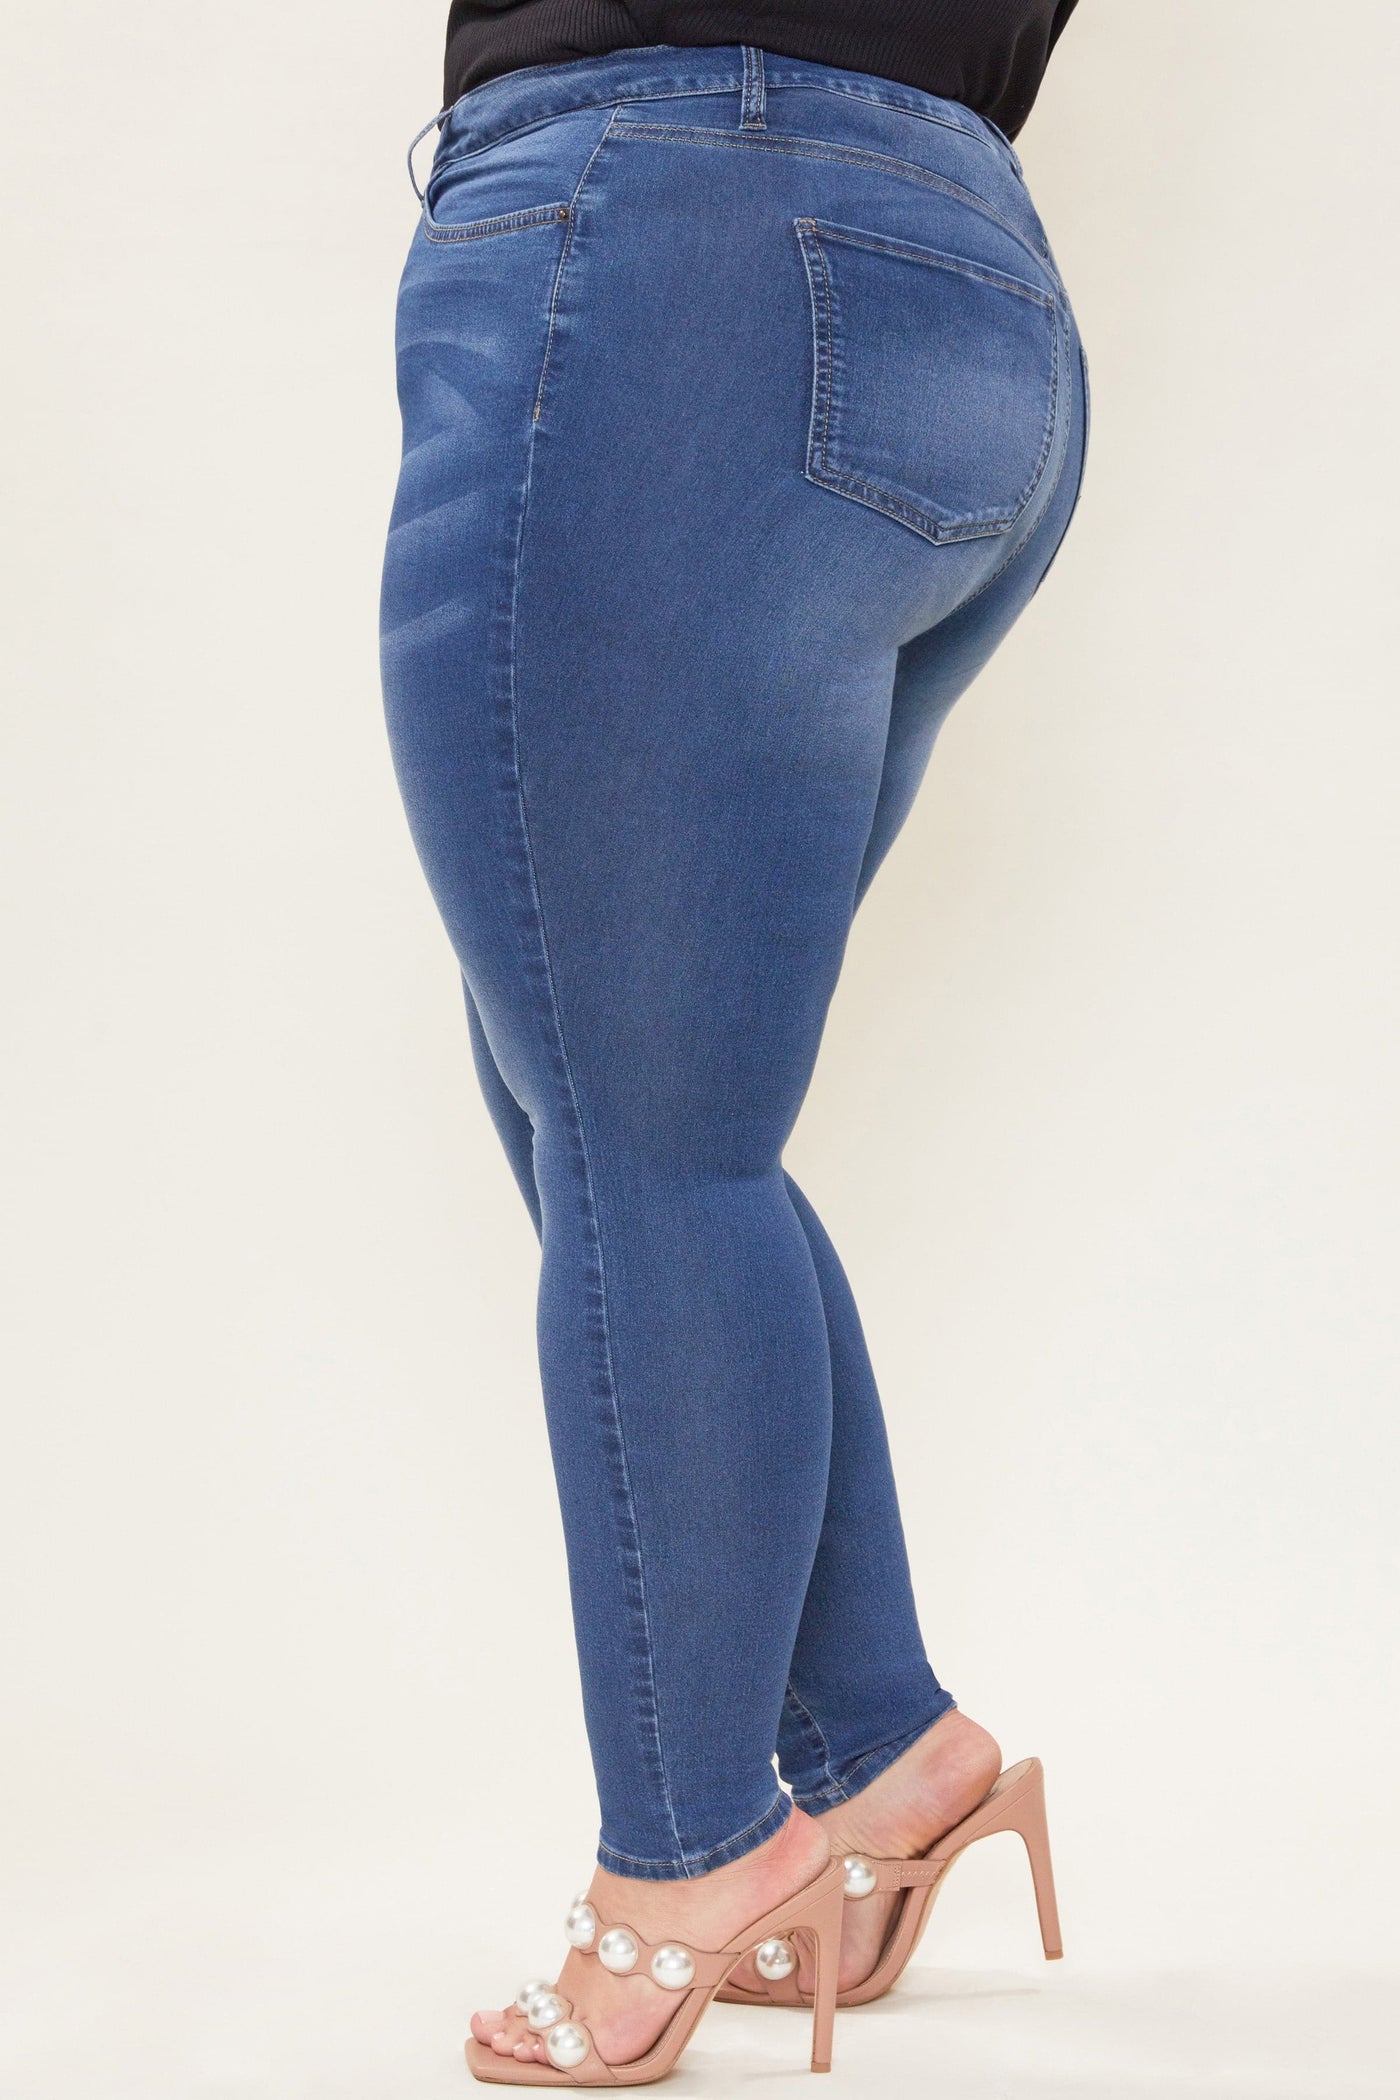 Women's Plus Size Hyperdenim Super Stretchy Jean